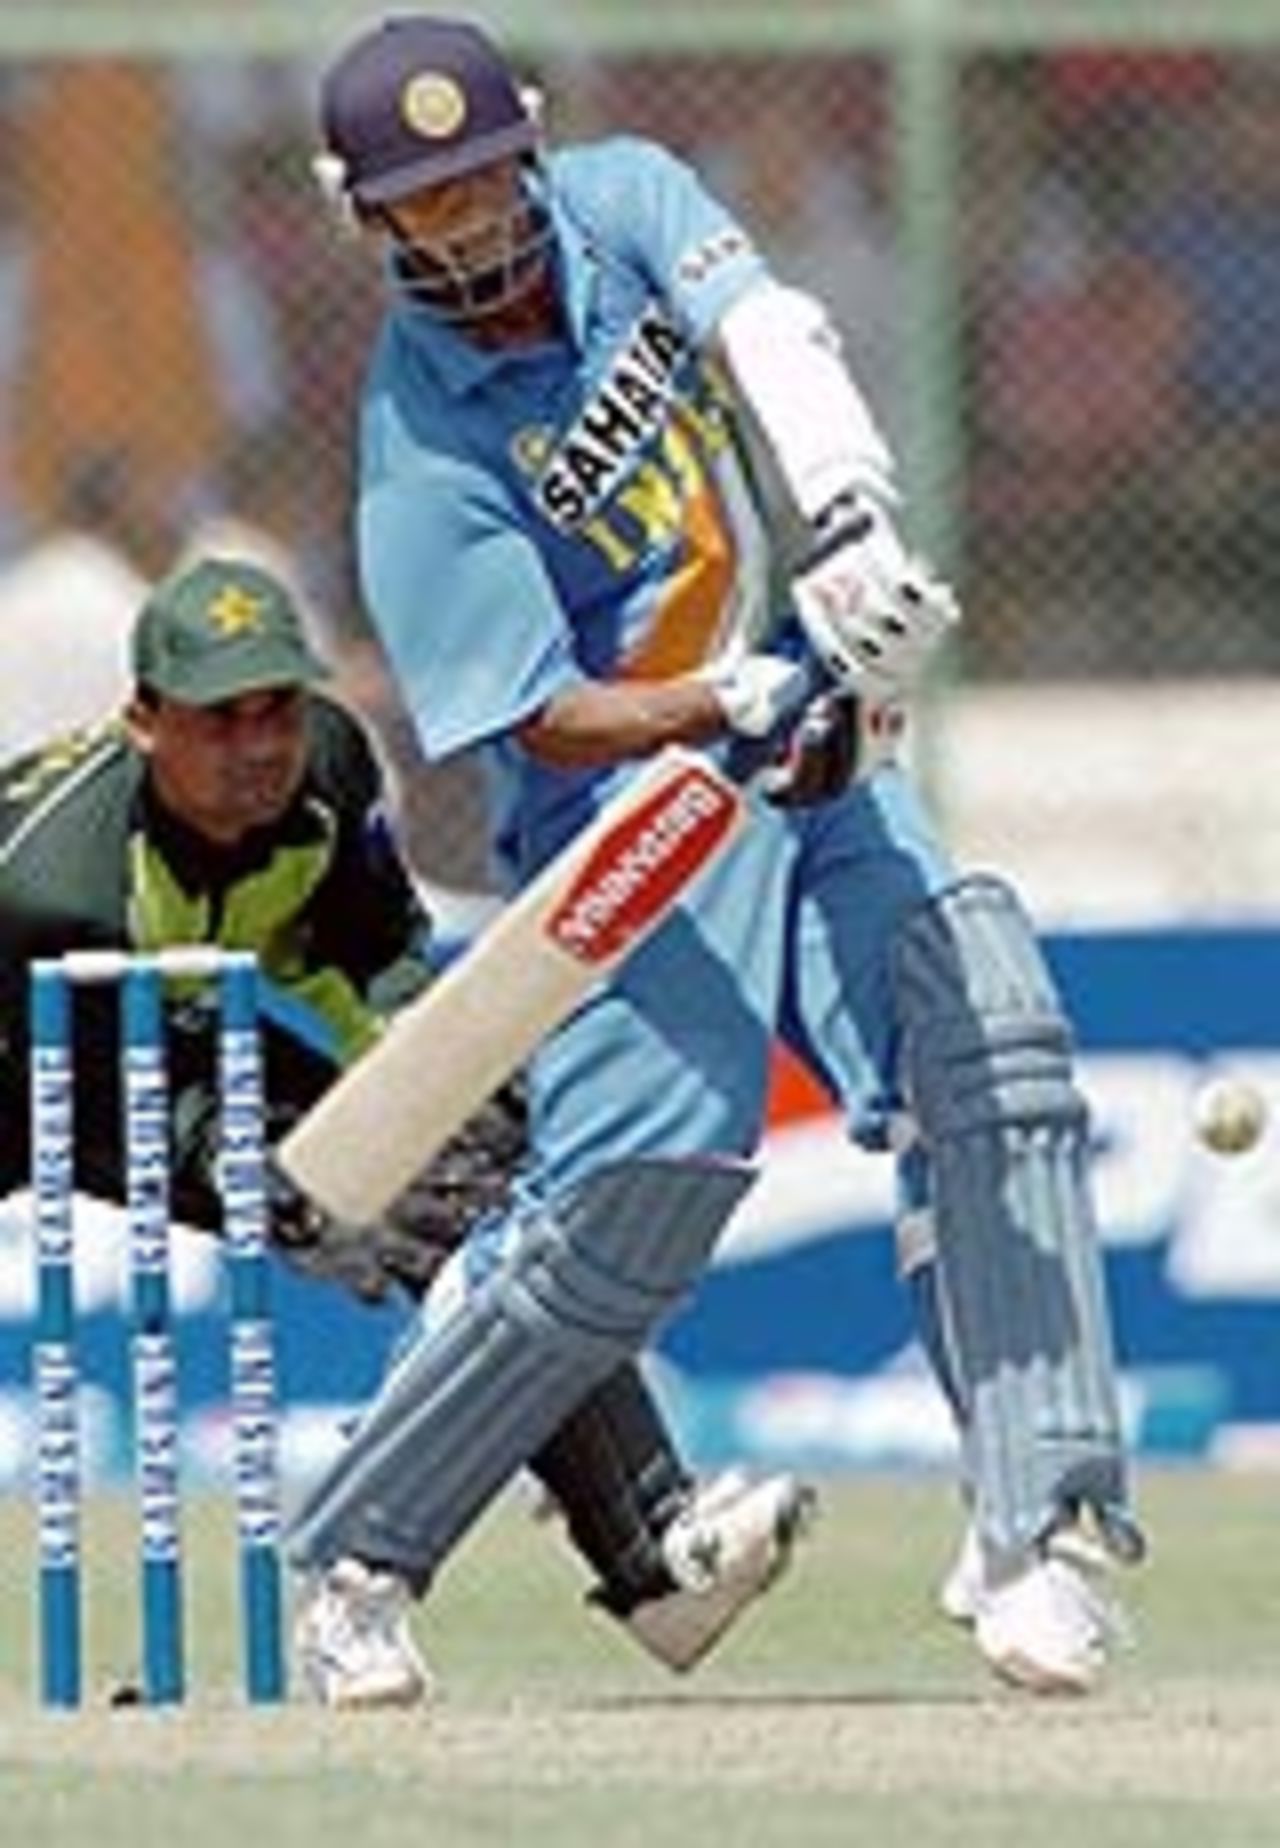 Rahul Dravid hits out on his way to 99, Pakistan v India, 1st ODI, Karachi, March 13, 2004